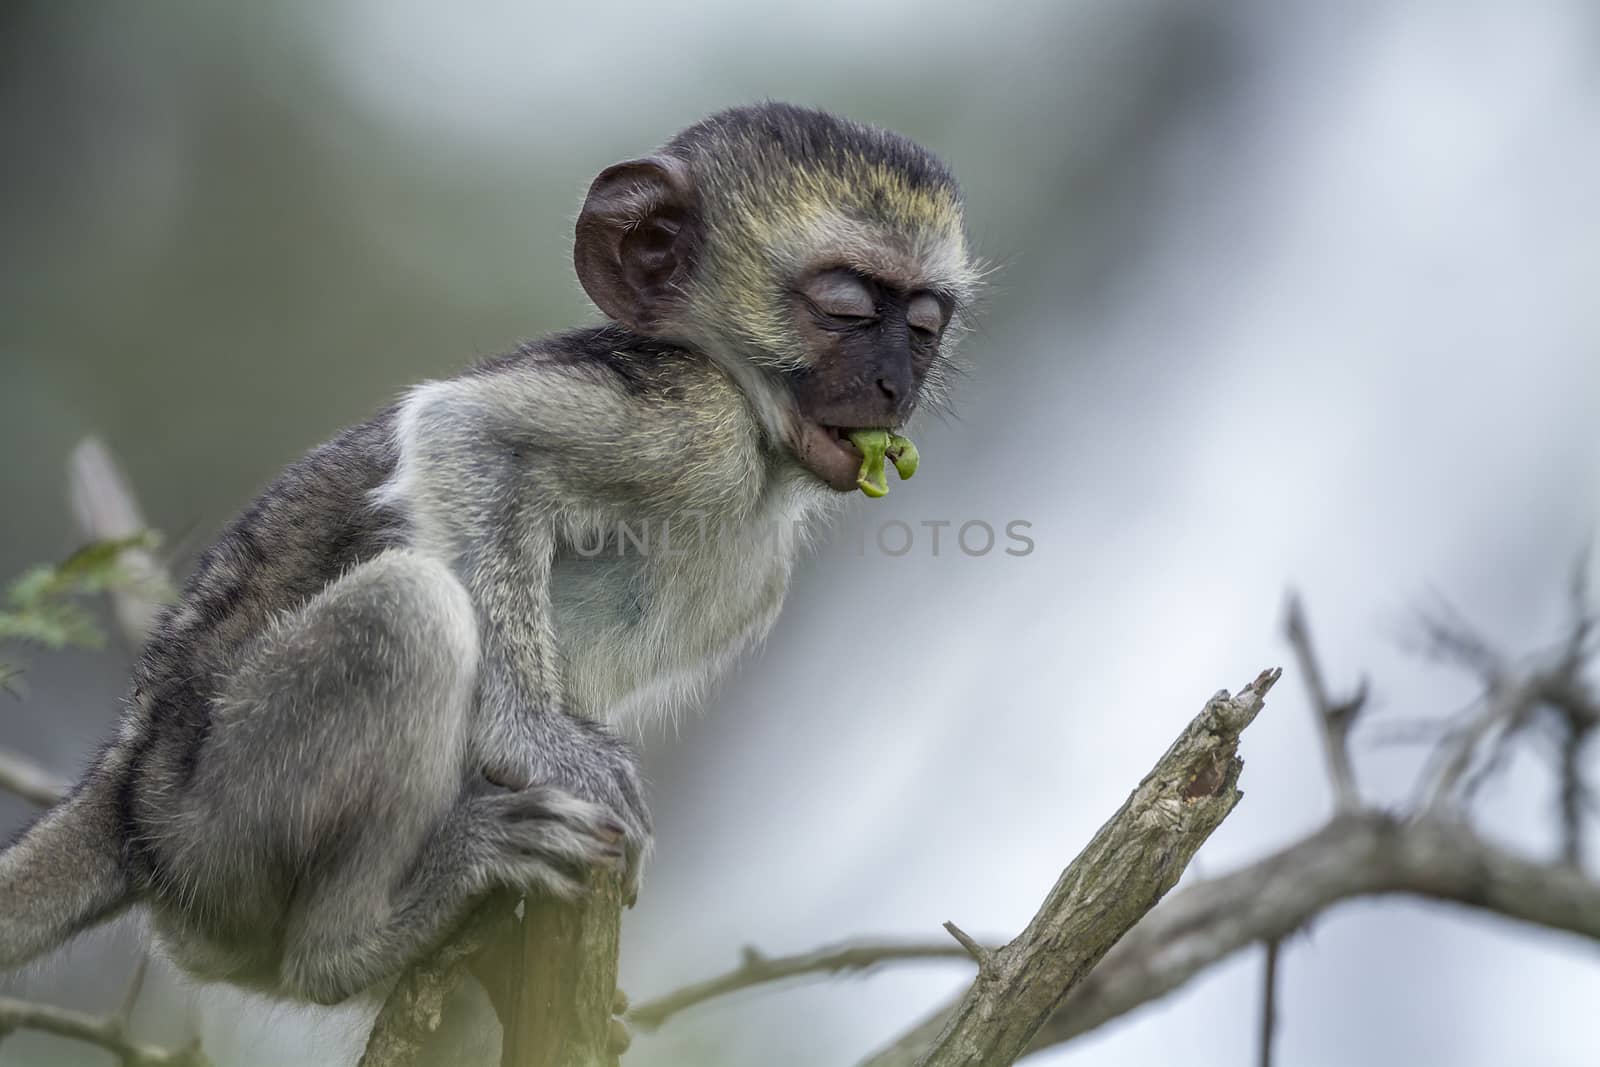 Vervet monkey in Kruger National park, South Africa by PACOCOMO